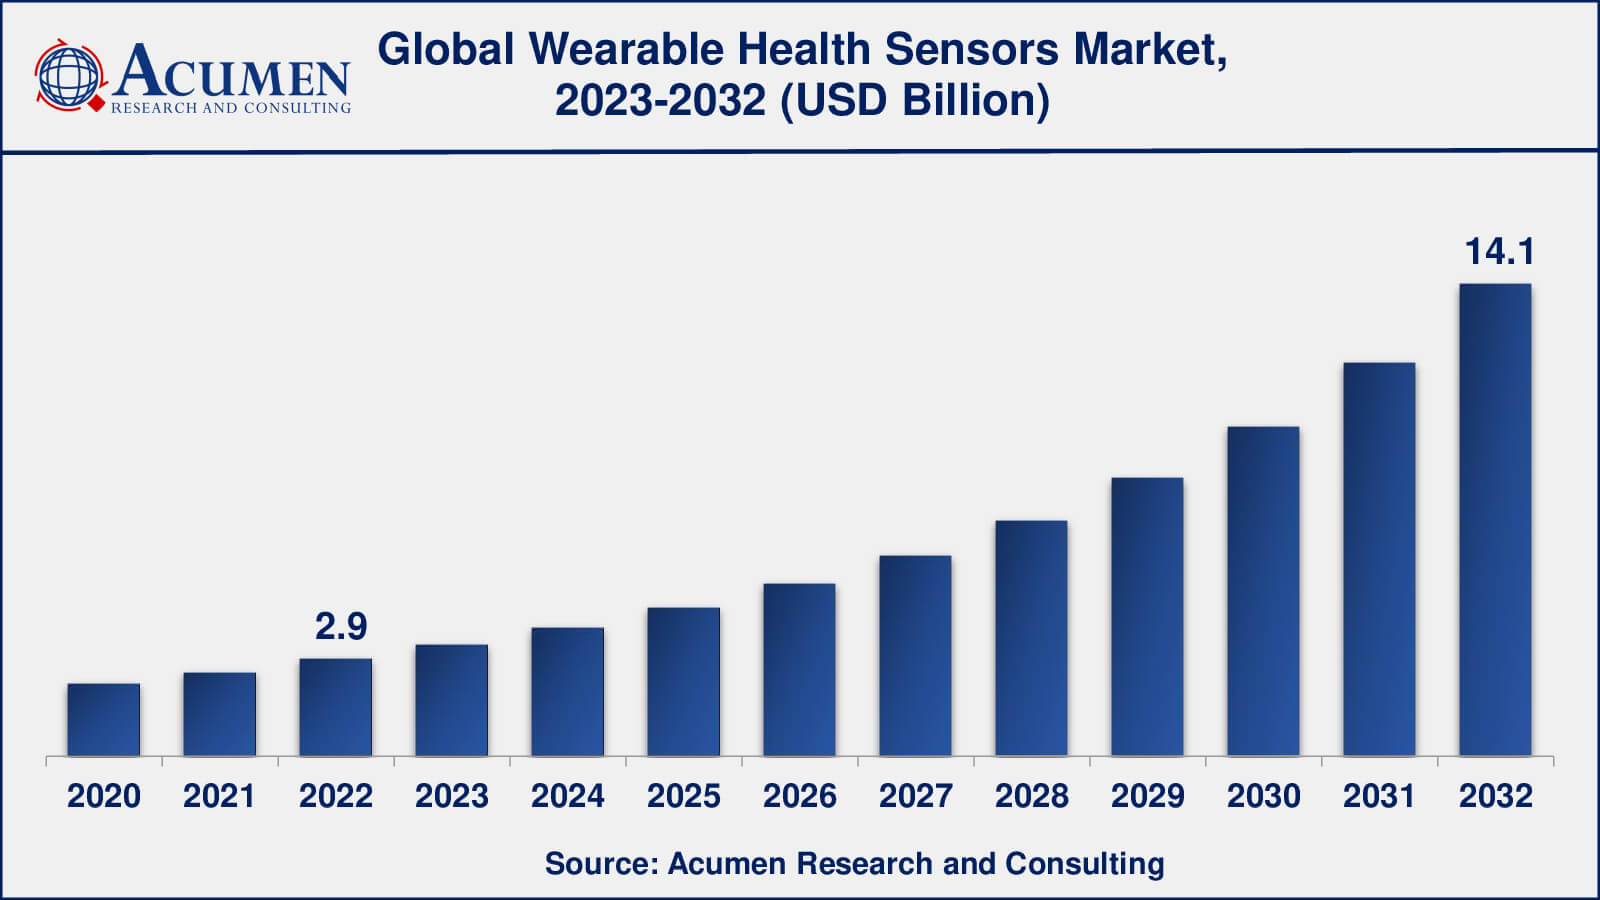 Wearable Health Sensors Market Analysis Period